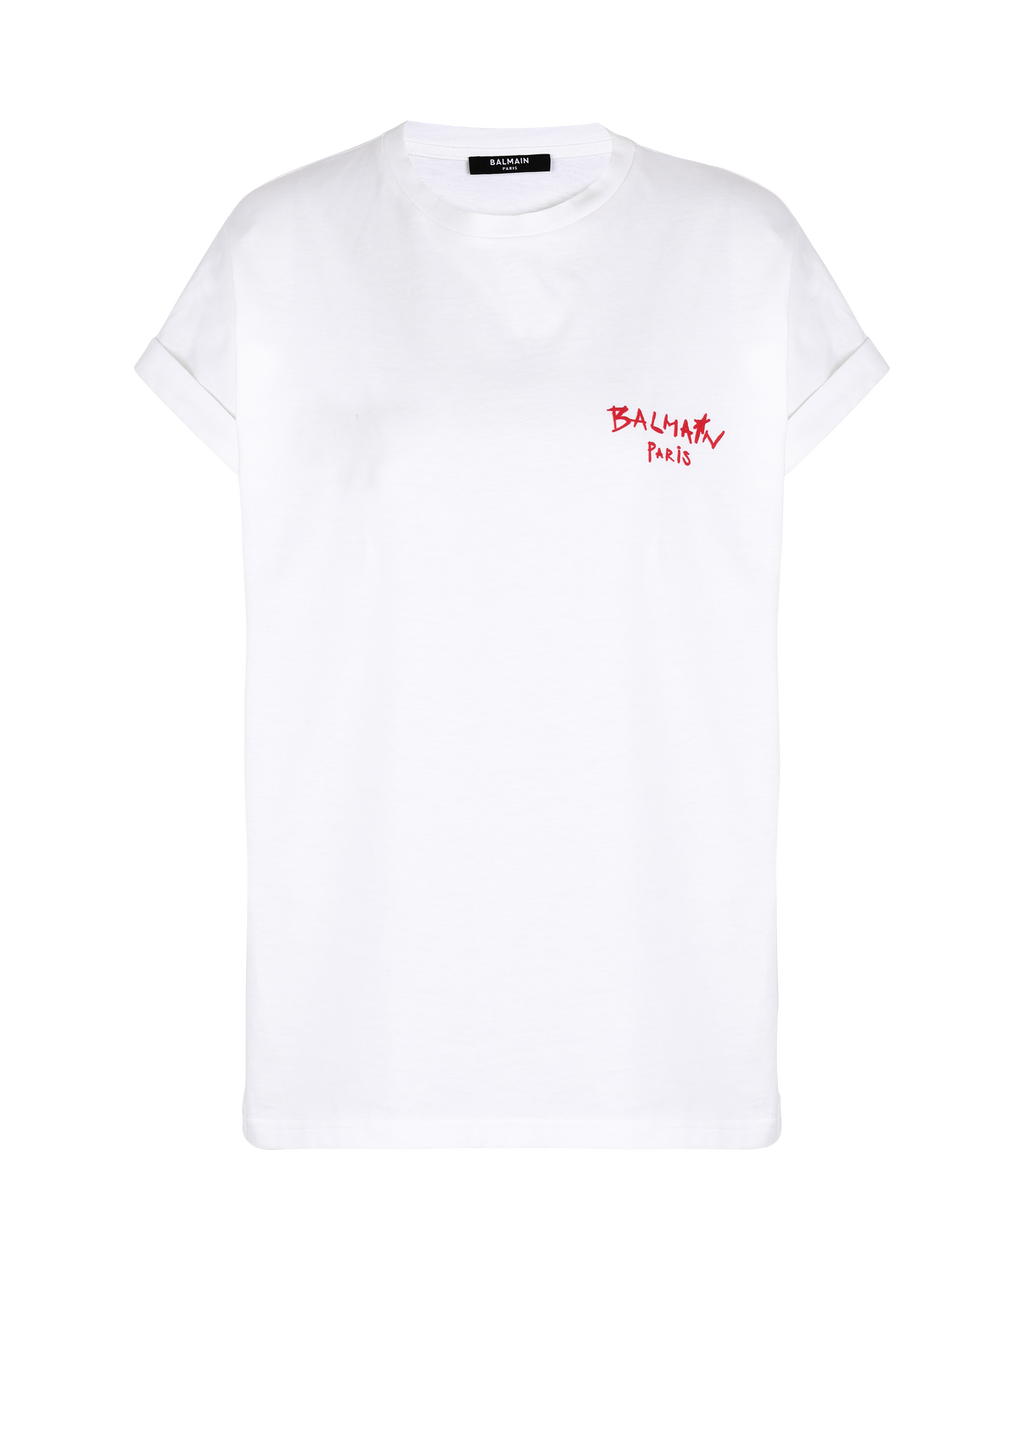 T-shirt en coton floqué petit logo graffiti Balmain, blanc, hi-res